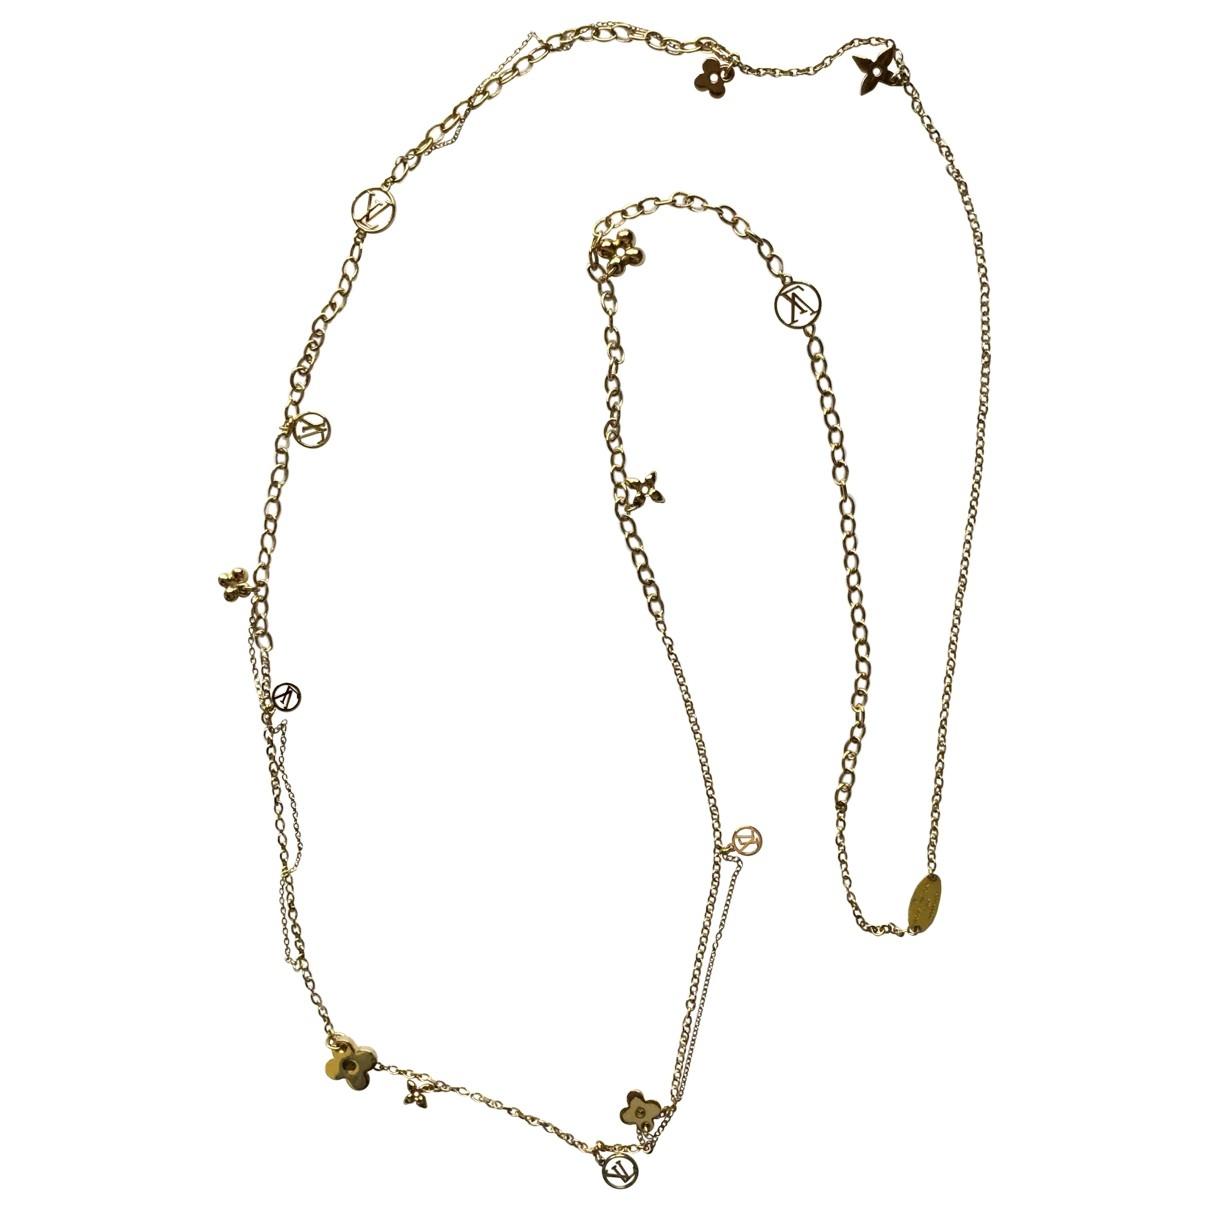 Lyst - Louis Vuitton Monogram Gold Metal Necklace in Metallic